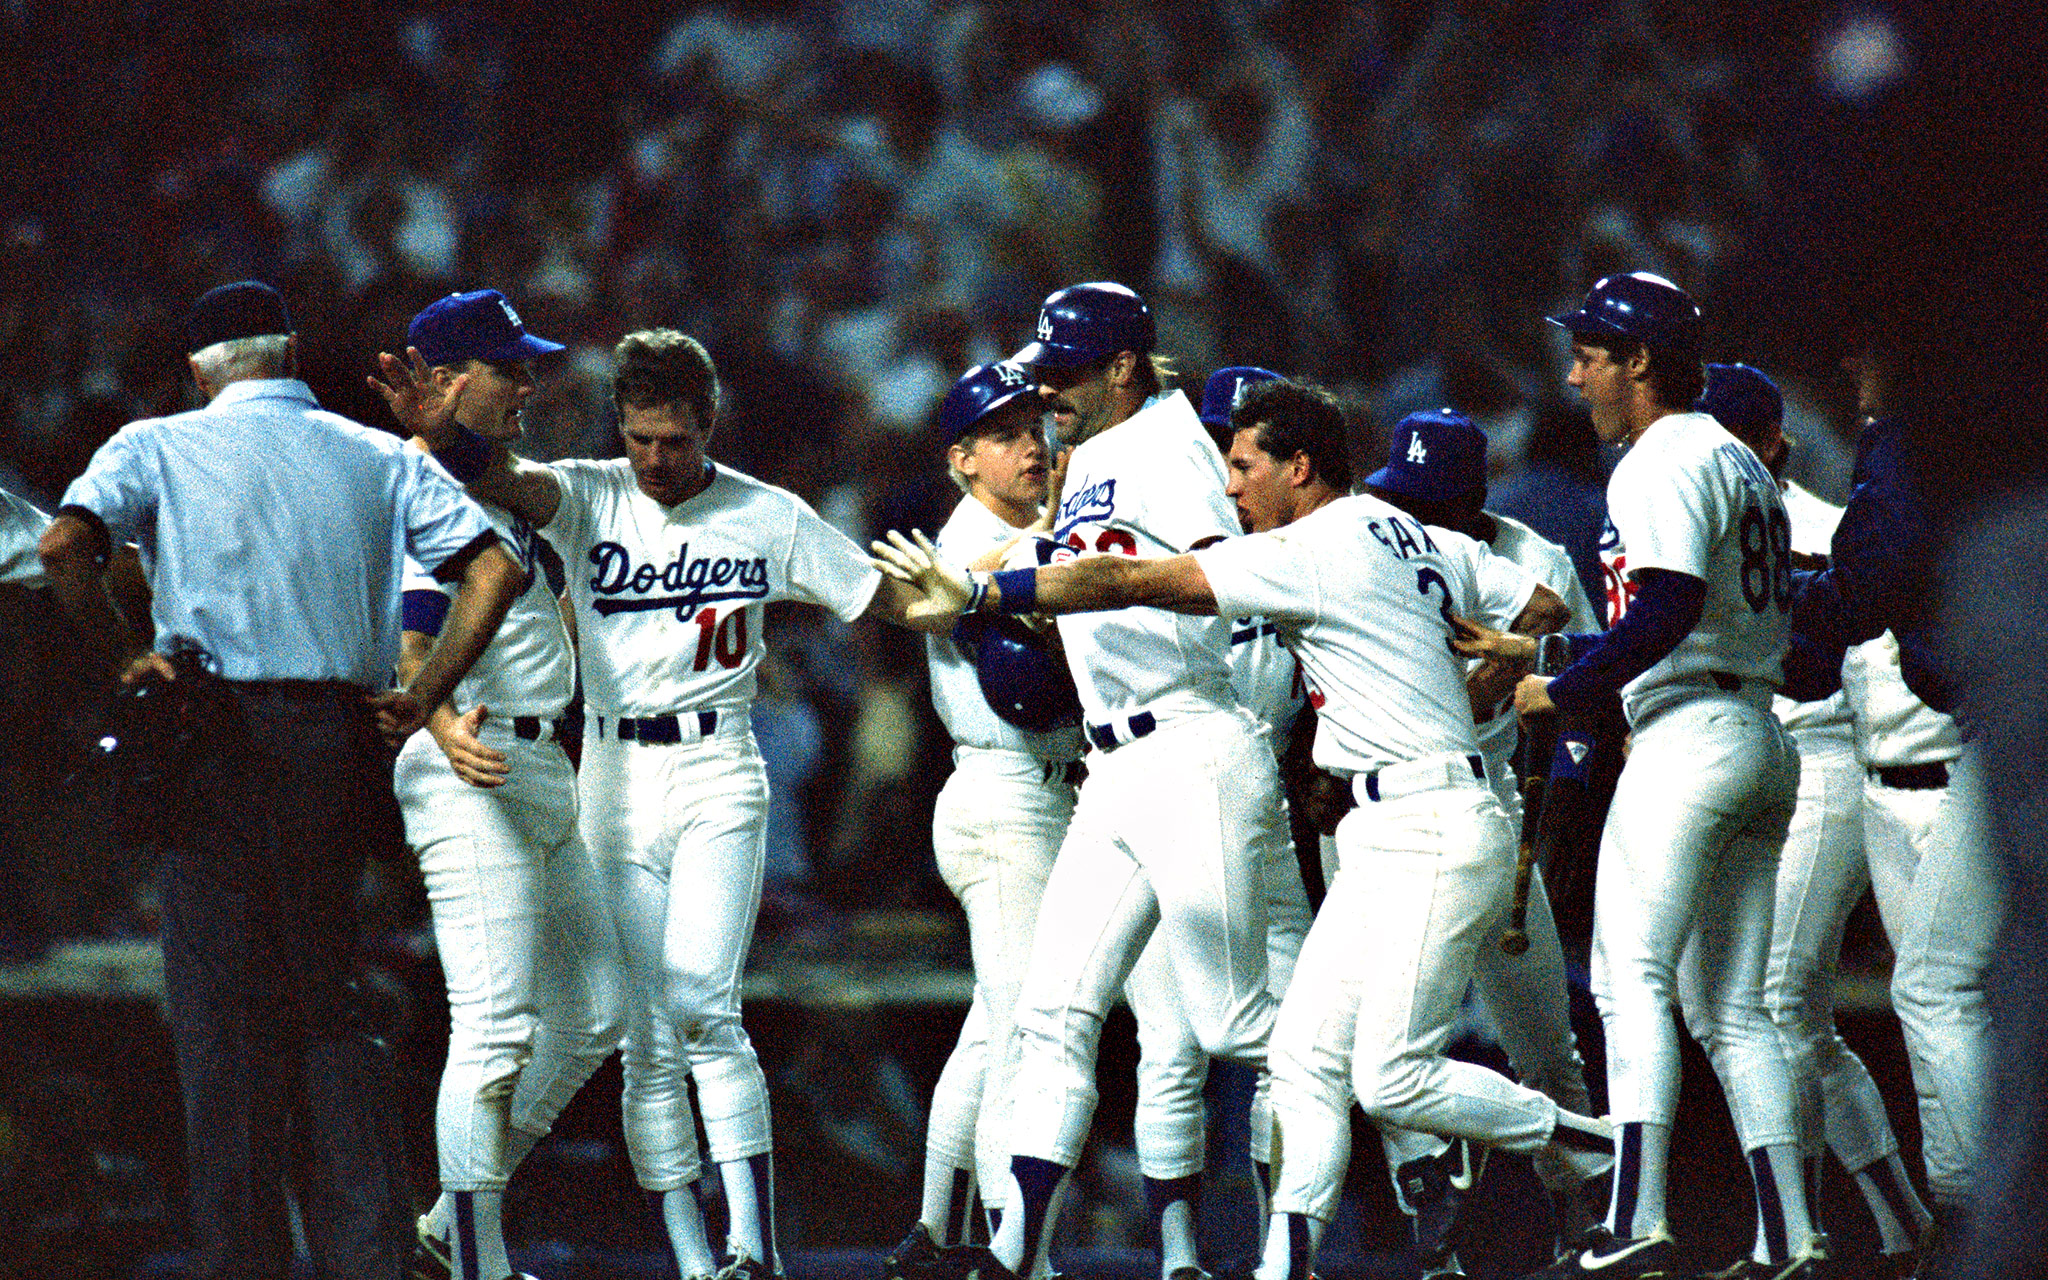 MLB -- Inside Kirk Gibson's World Series home run 30 years later - ESPN